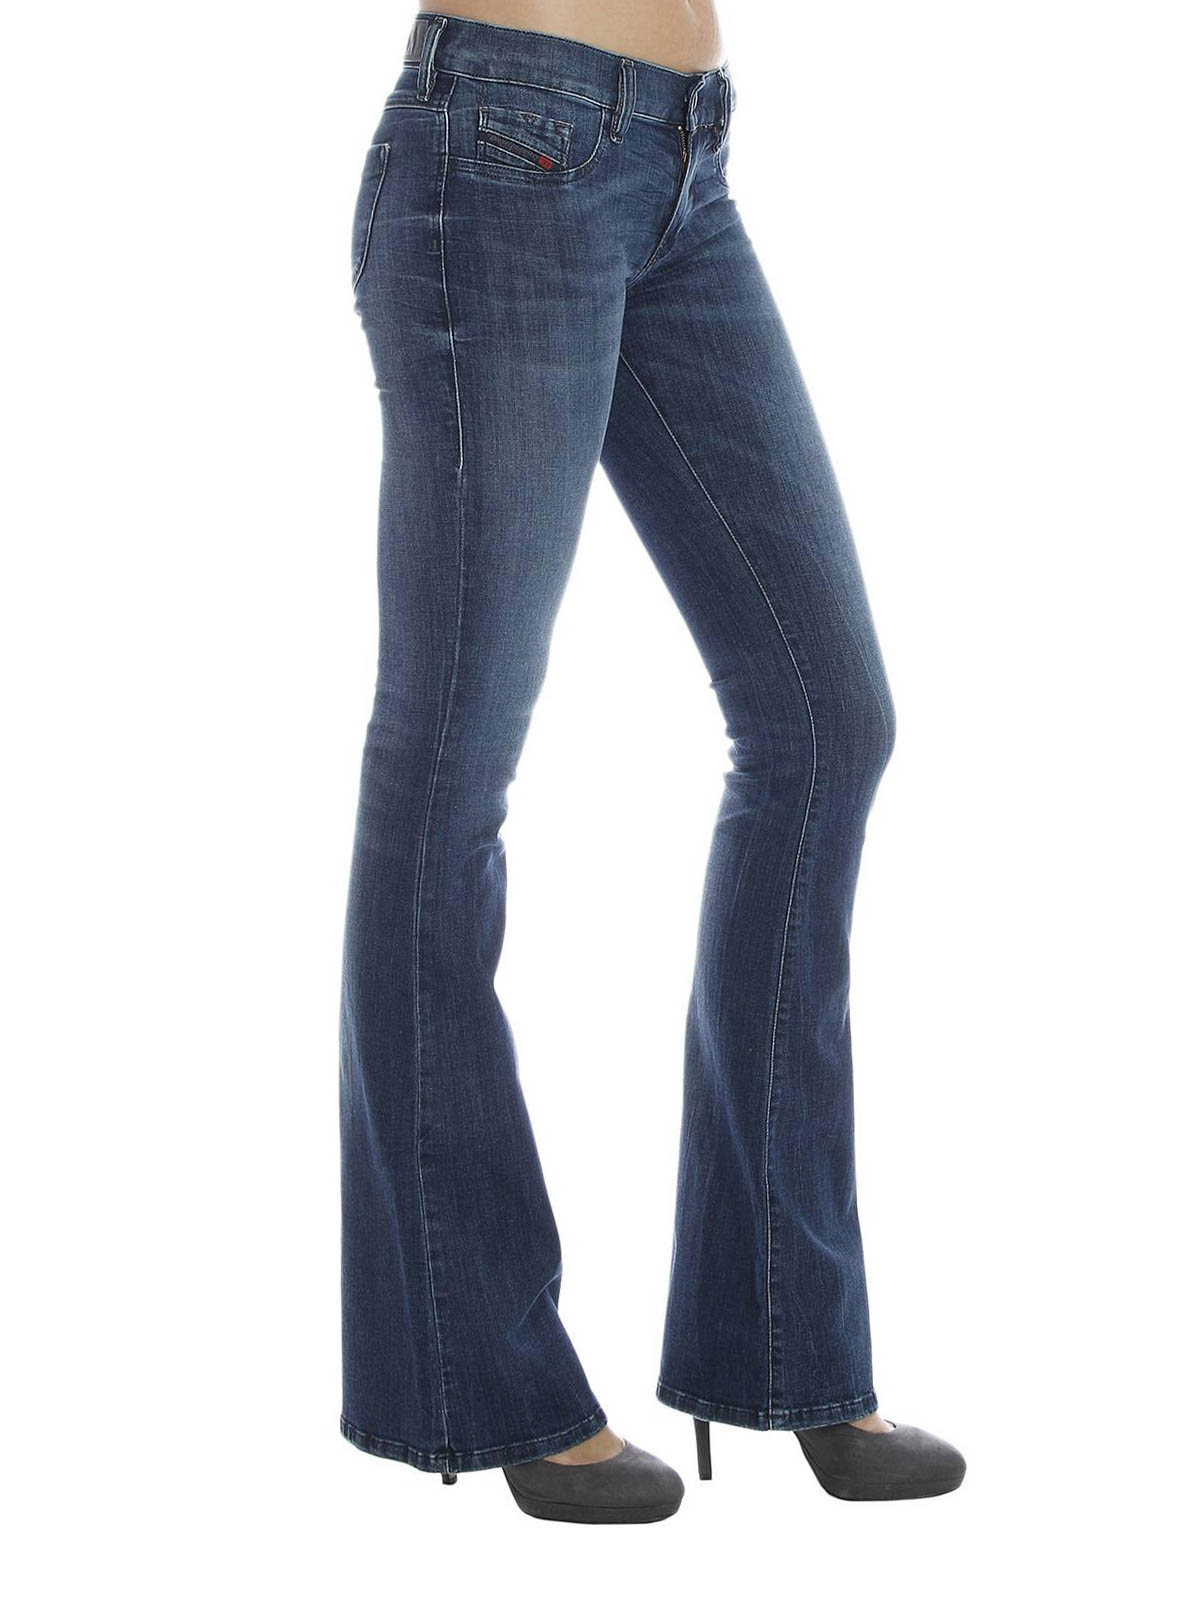 jeans Livier flare jeans 00CV26670F01 | iKRIX.com